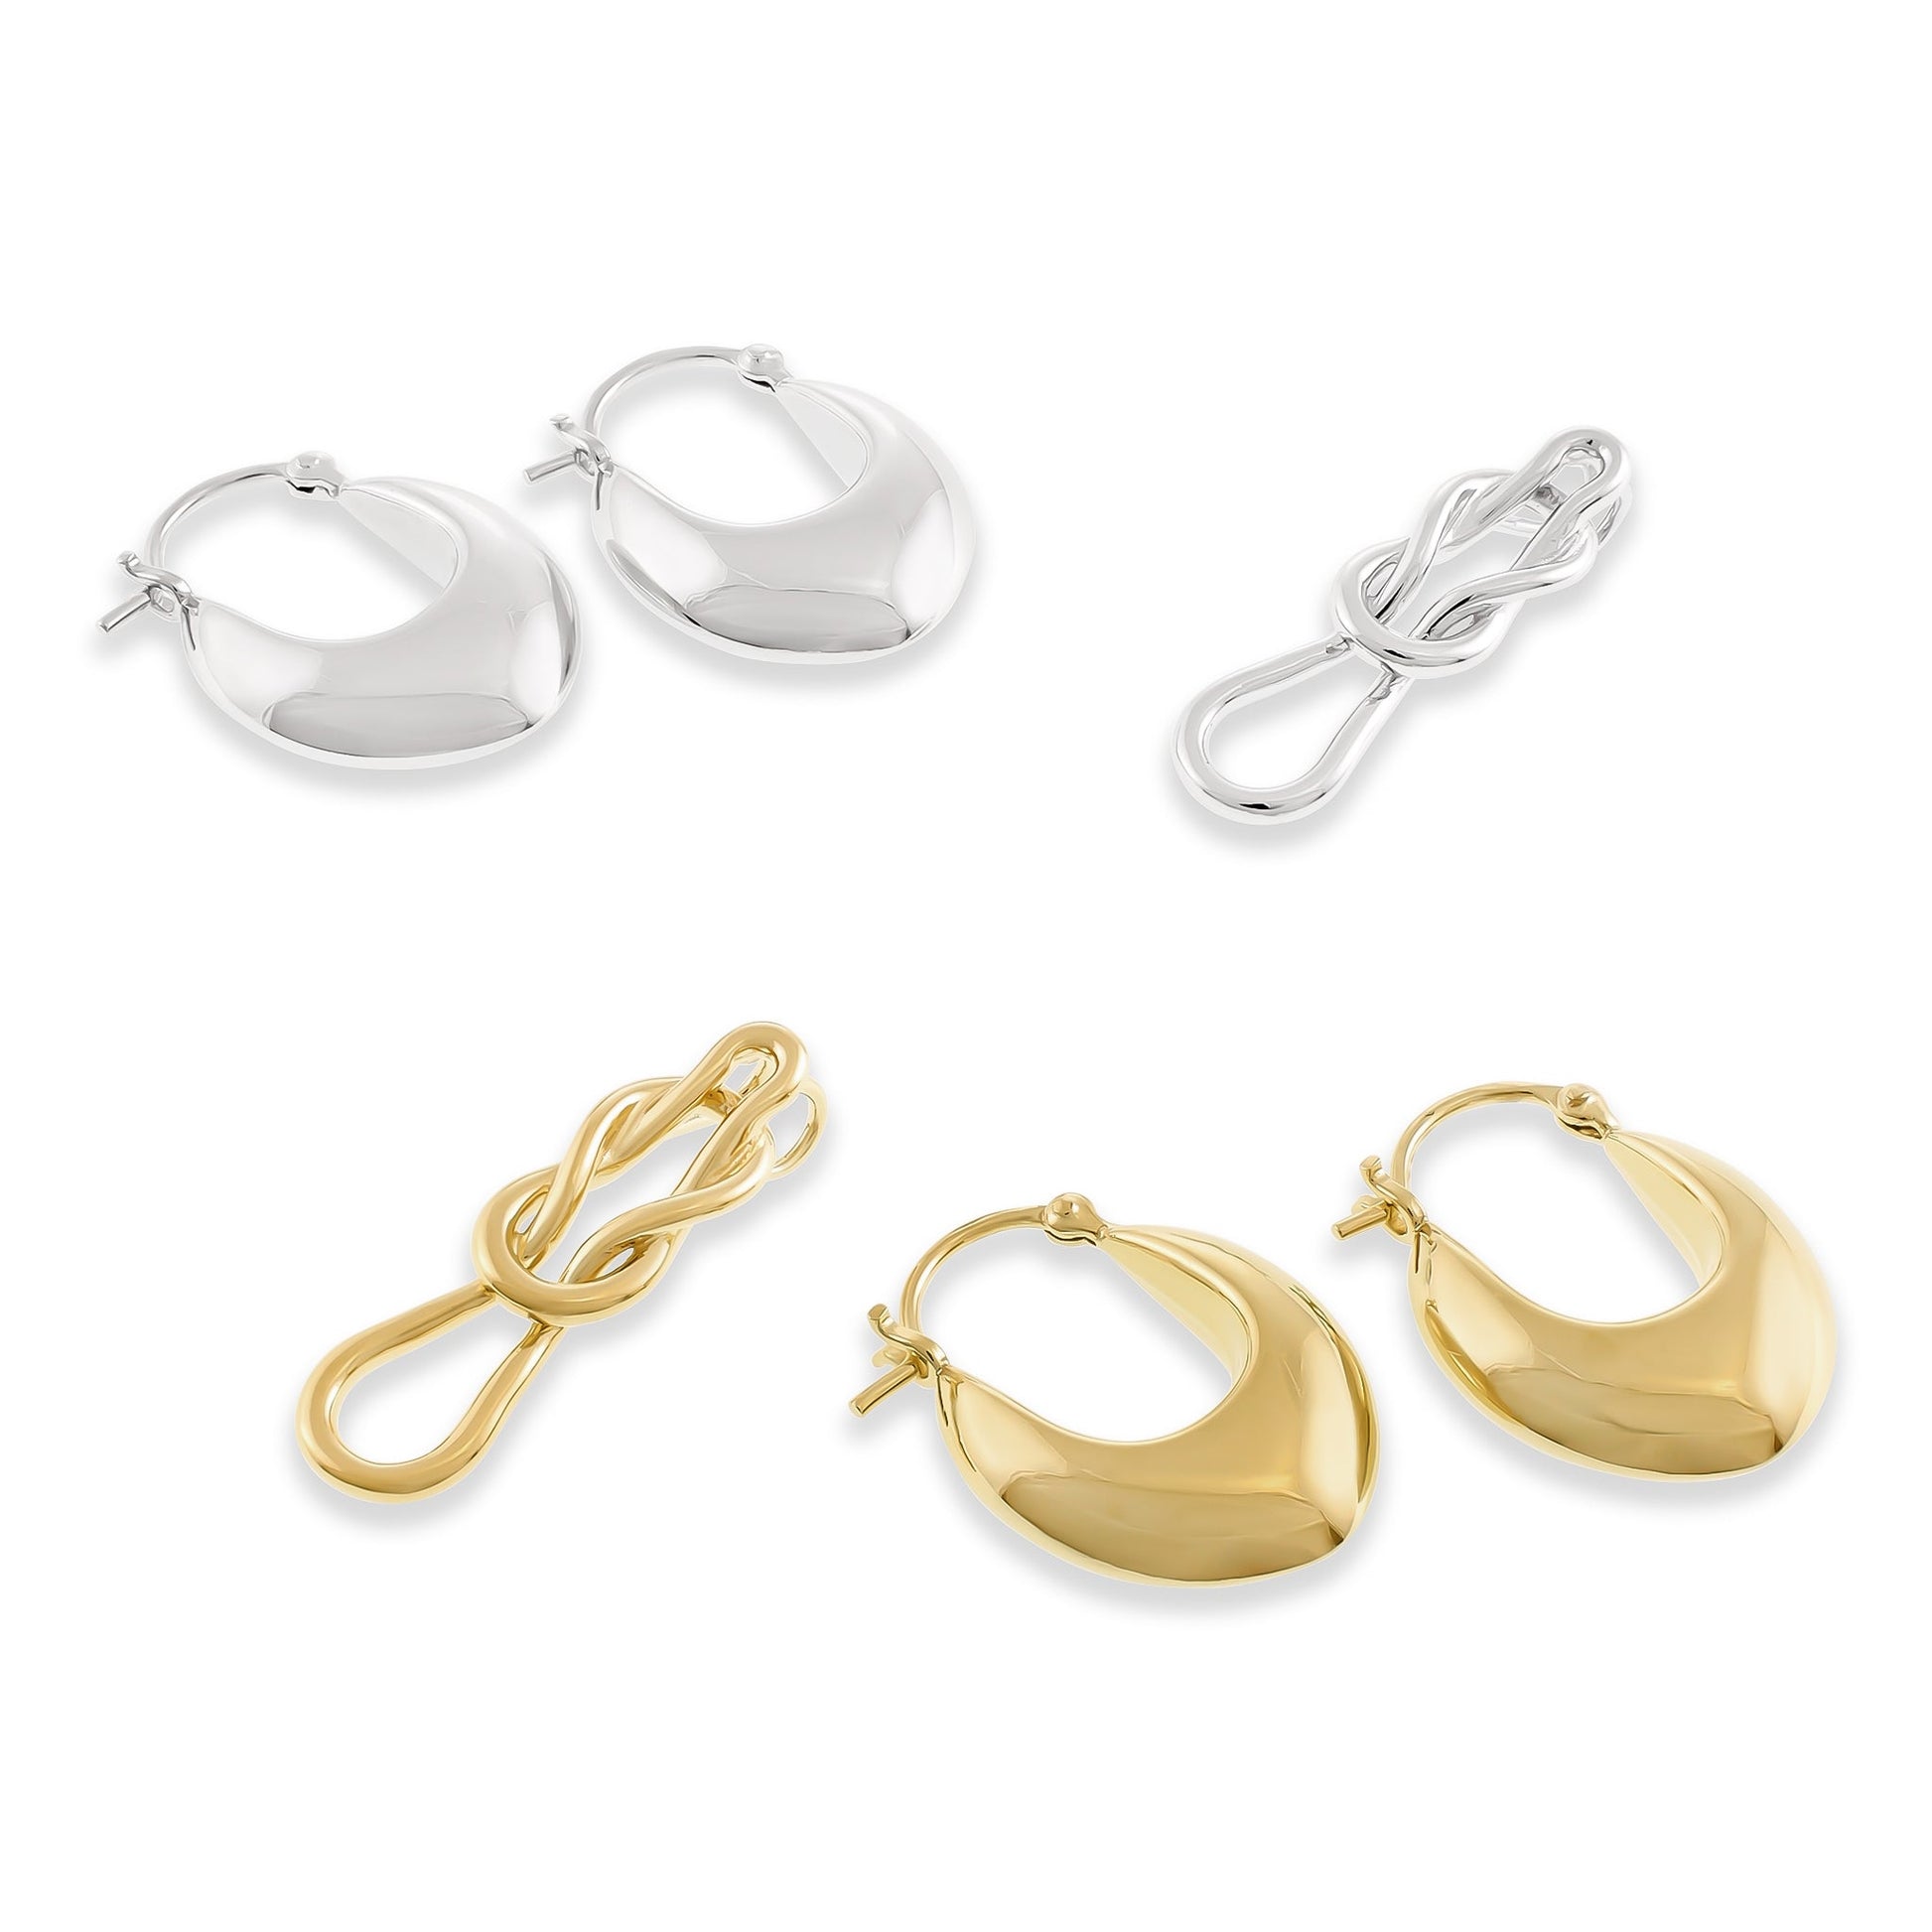 14k gold plated 1 micron huggie earrings PER1008 - FJewellery